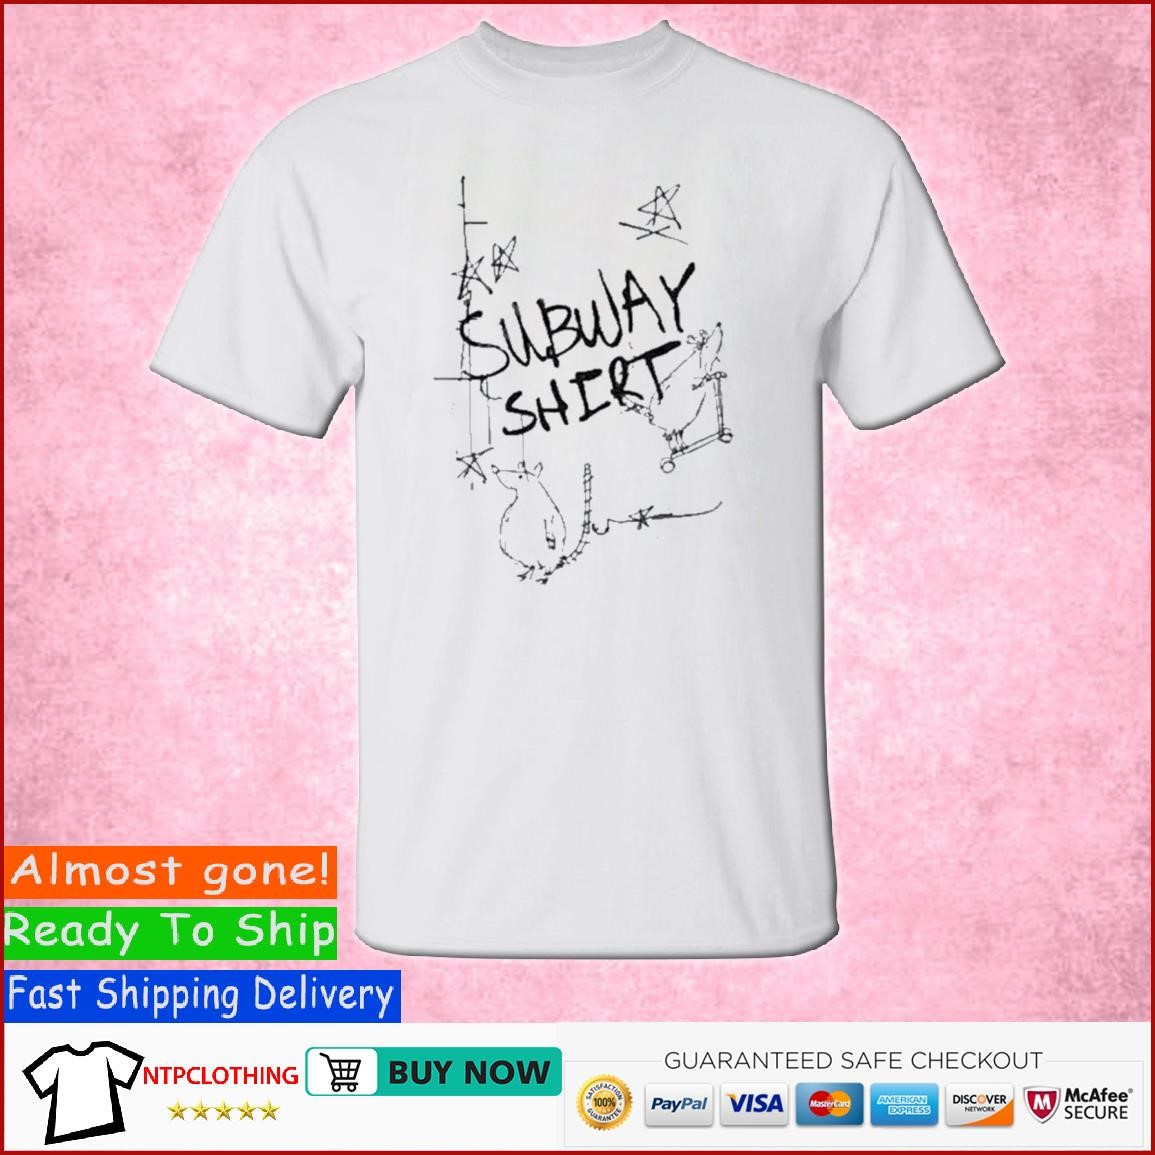 Subway Humor T-Shirts & T-Shirt Designs